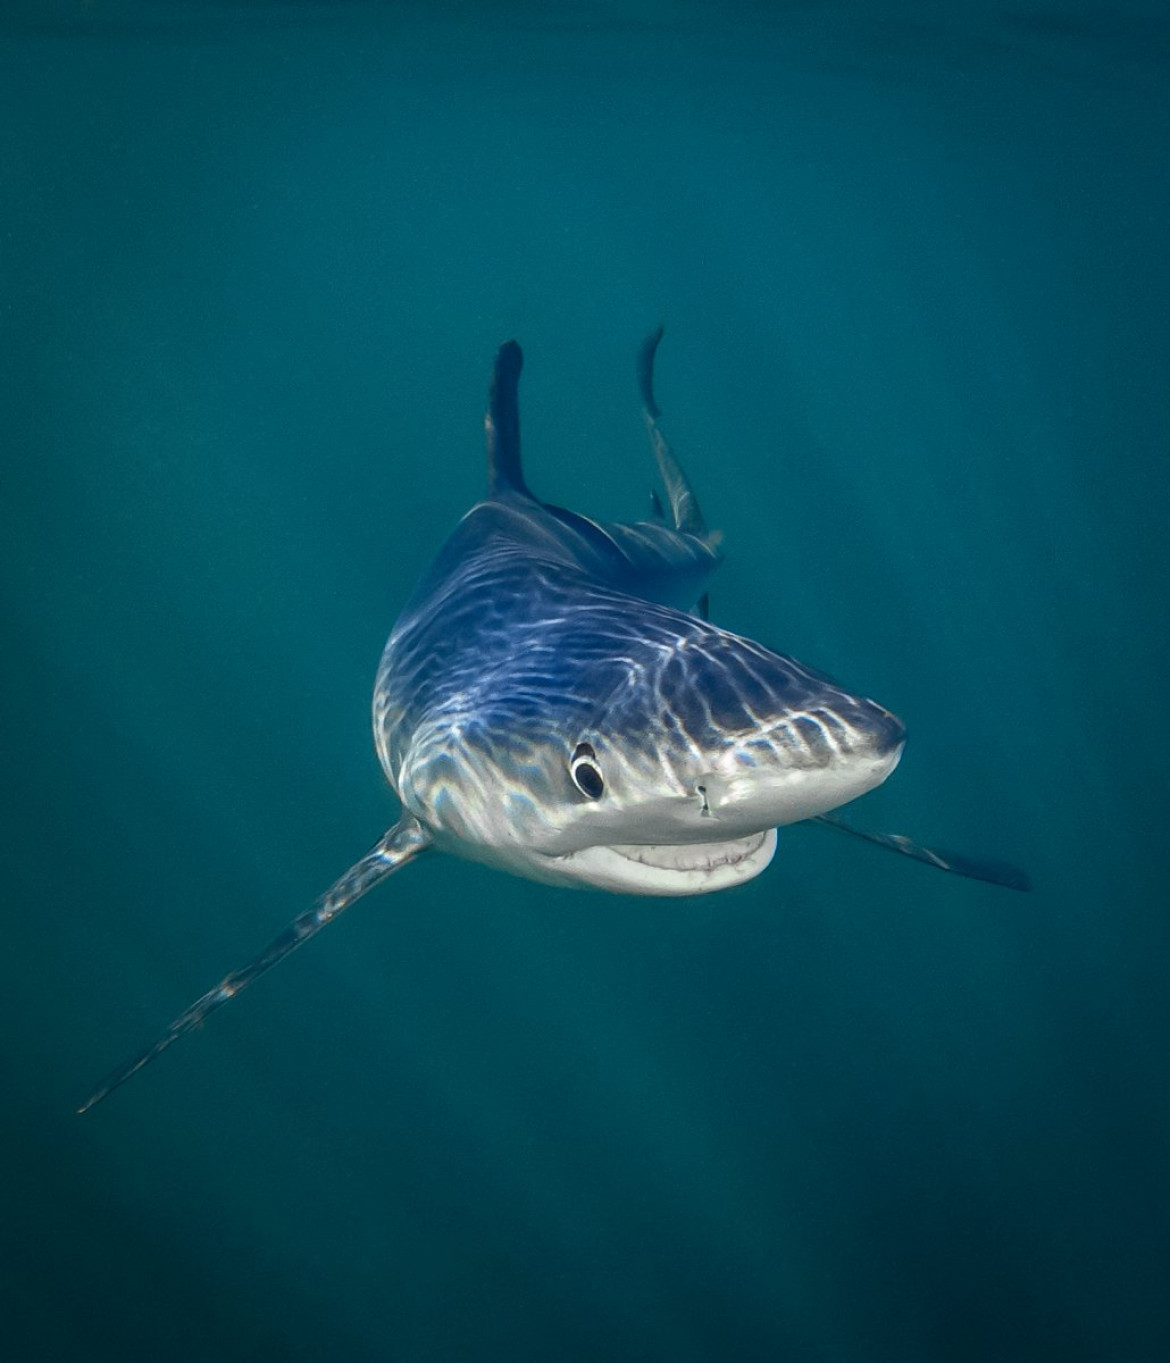 fot. Tanya Houpermans, "Smiling Blue Shark", Comedy Wildlife Photography Awards 2018